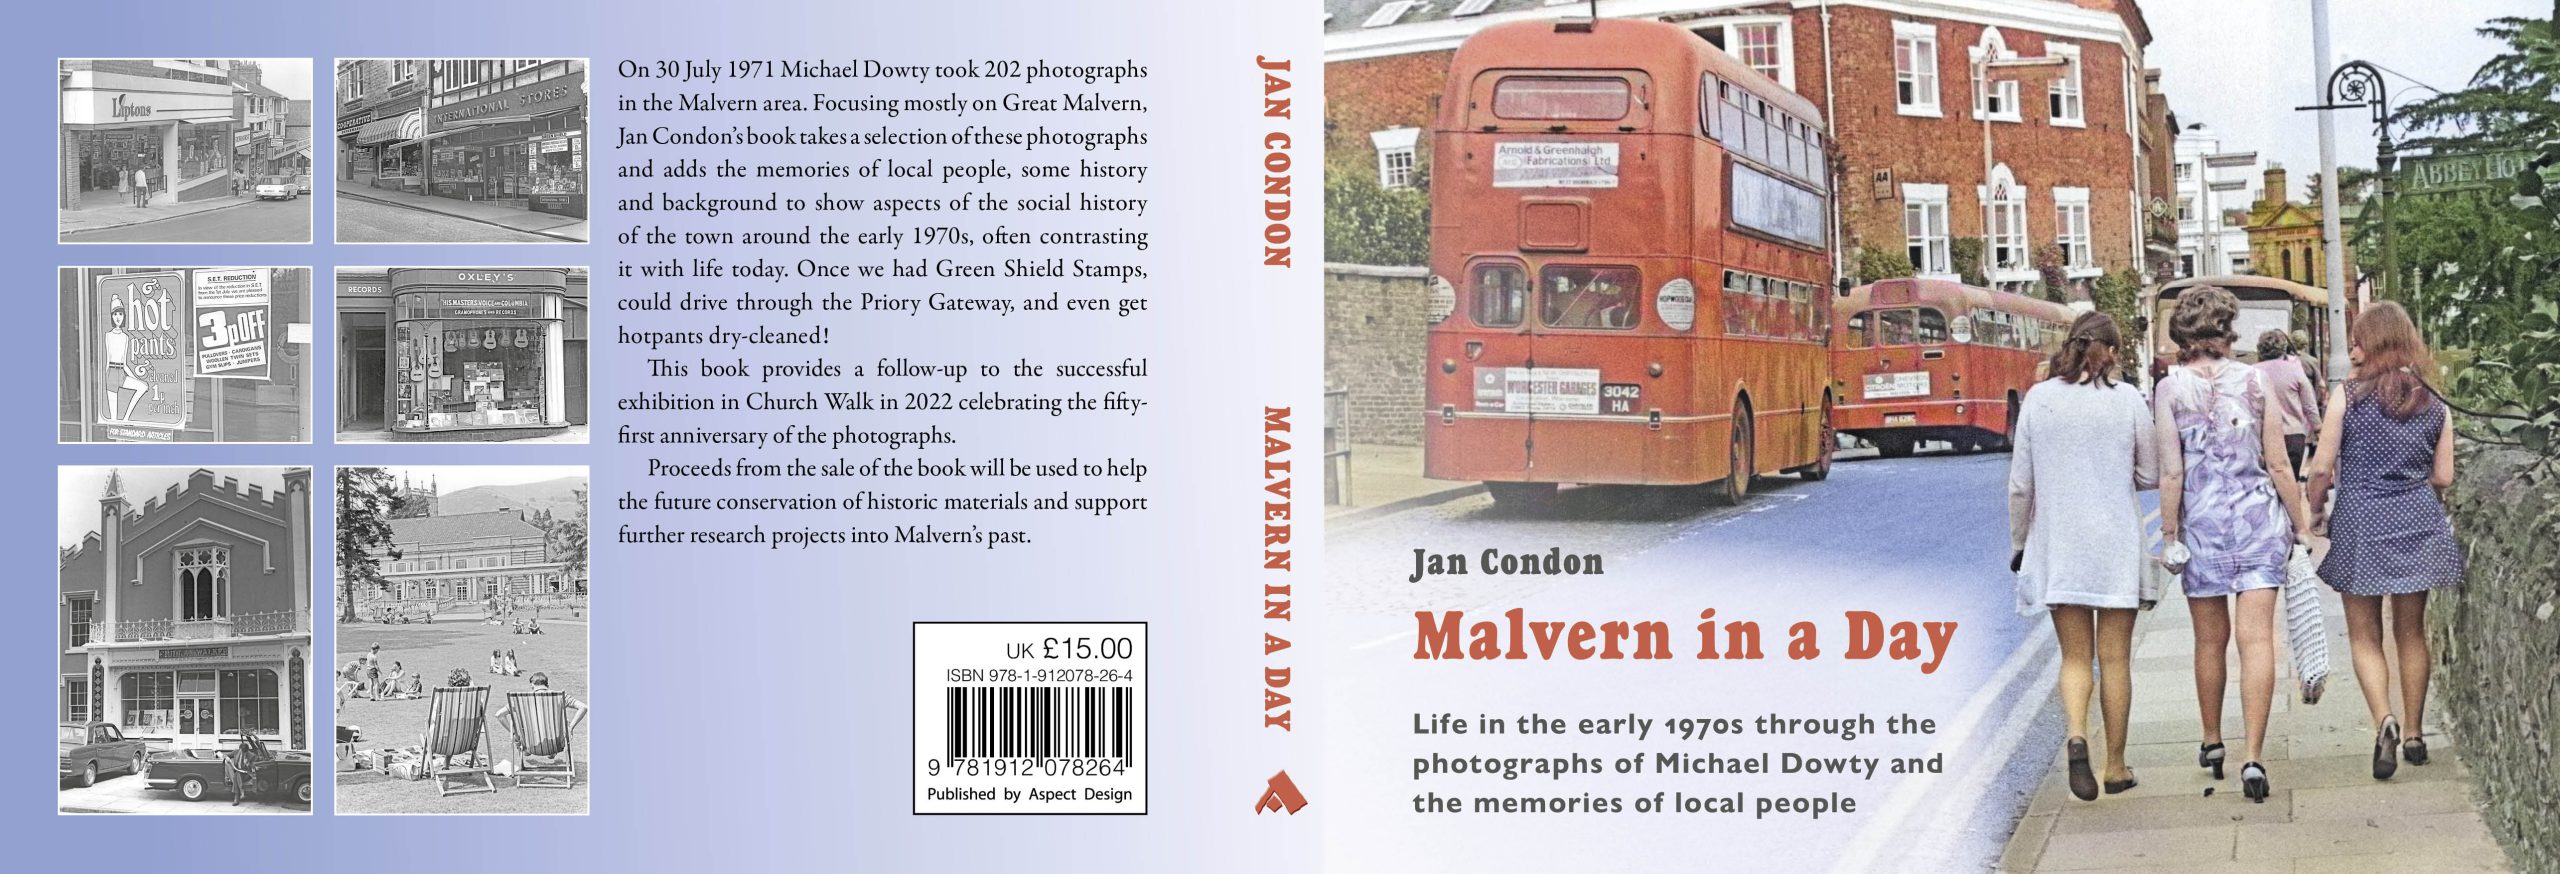 Malvern in a Day cover